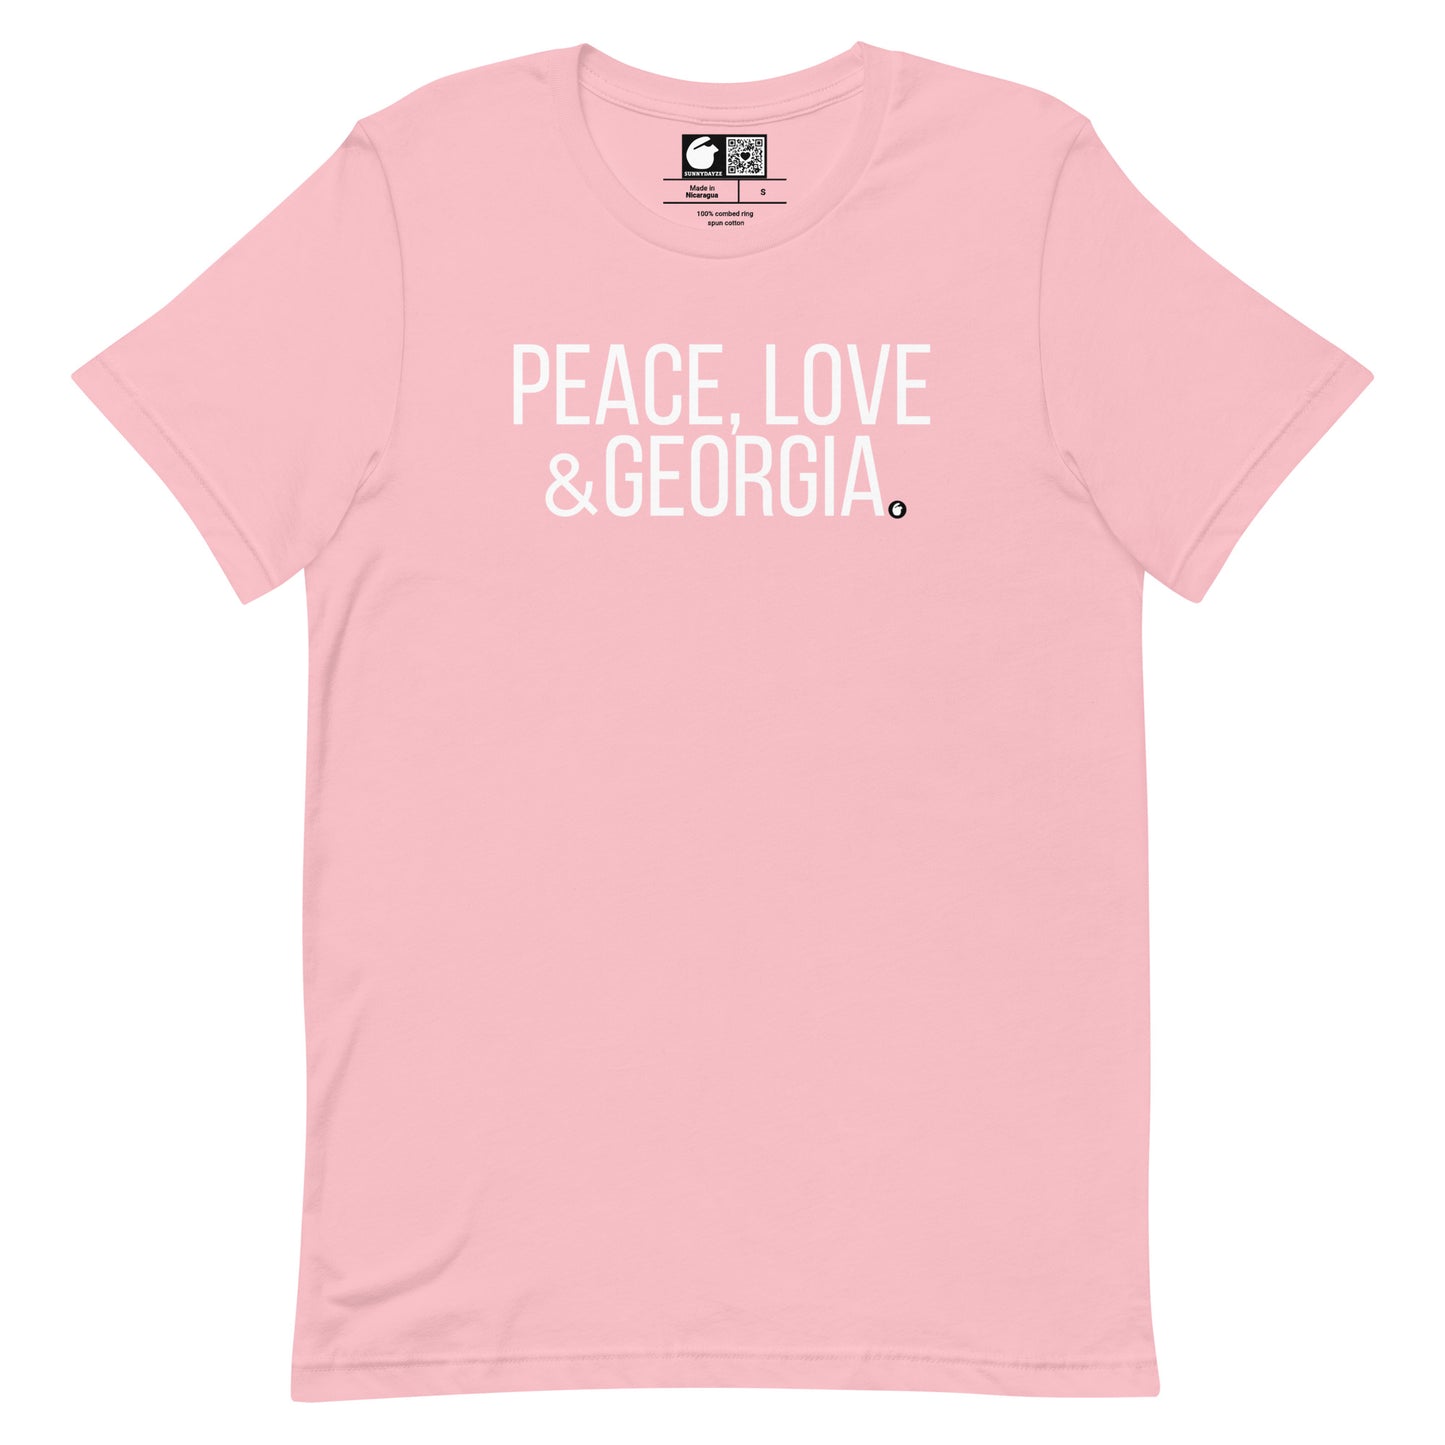 GEORGIA Short-Sleeve Unisex t-shirt